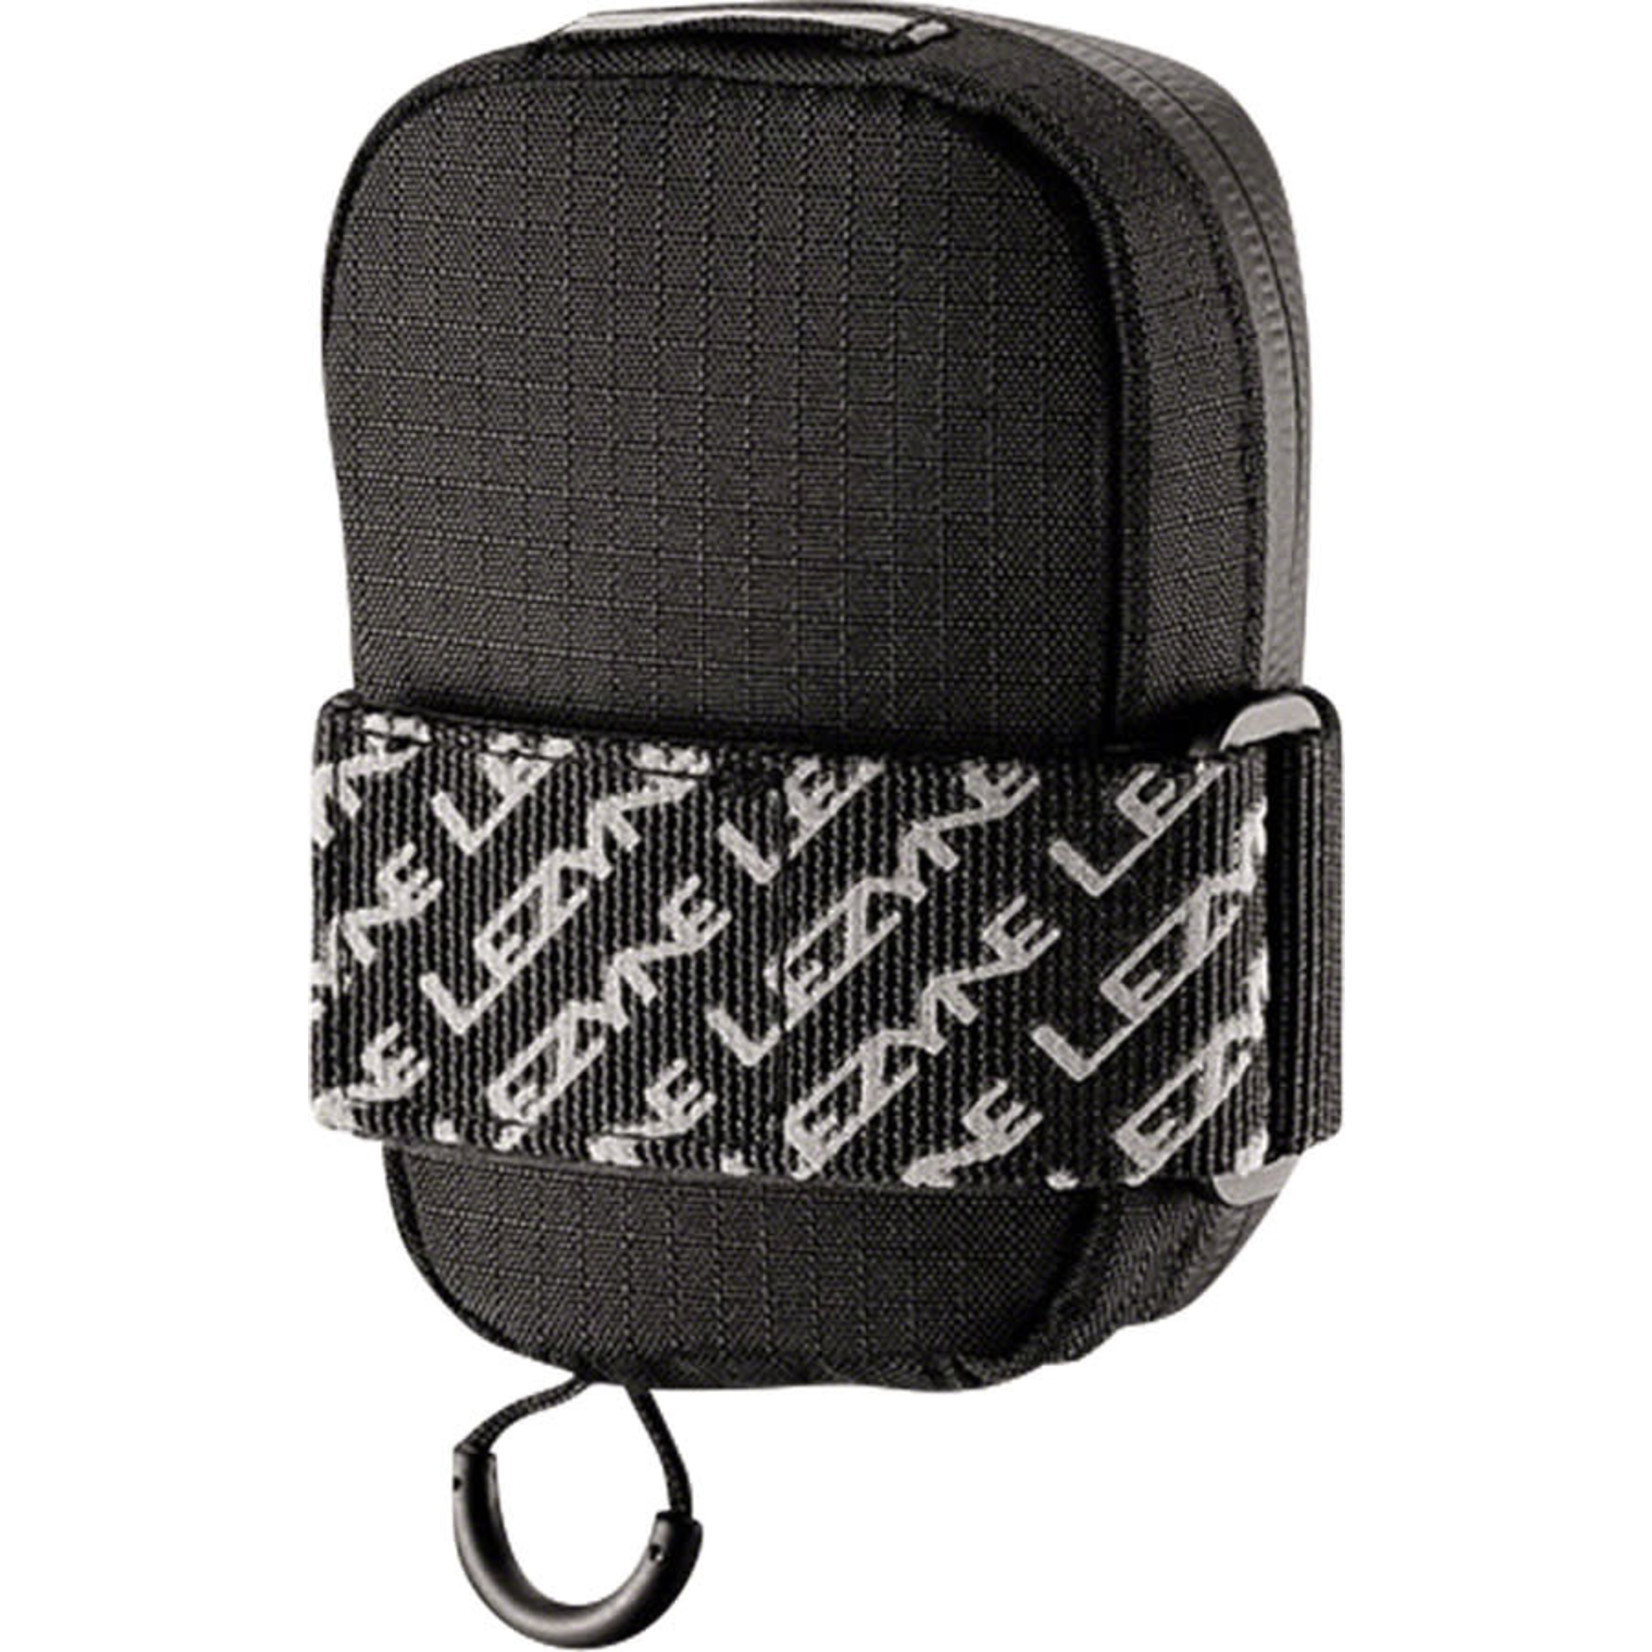 Lezyne Lezyne Road Caddy Saddle Bag Single Strap Compact: Black